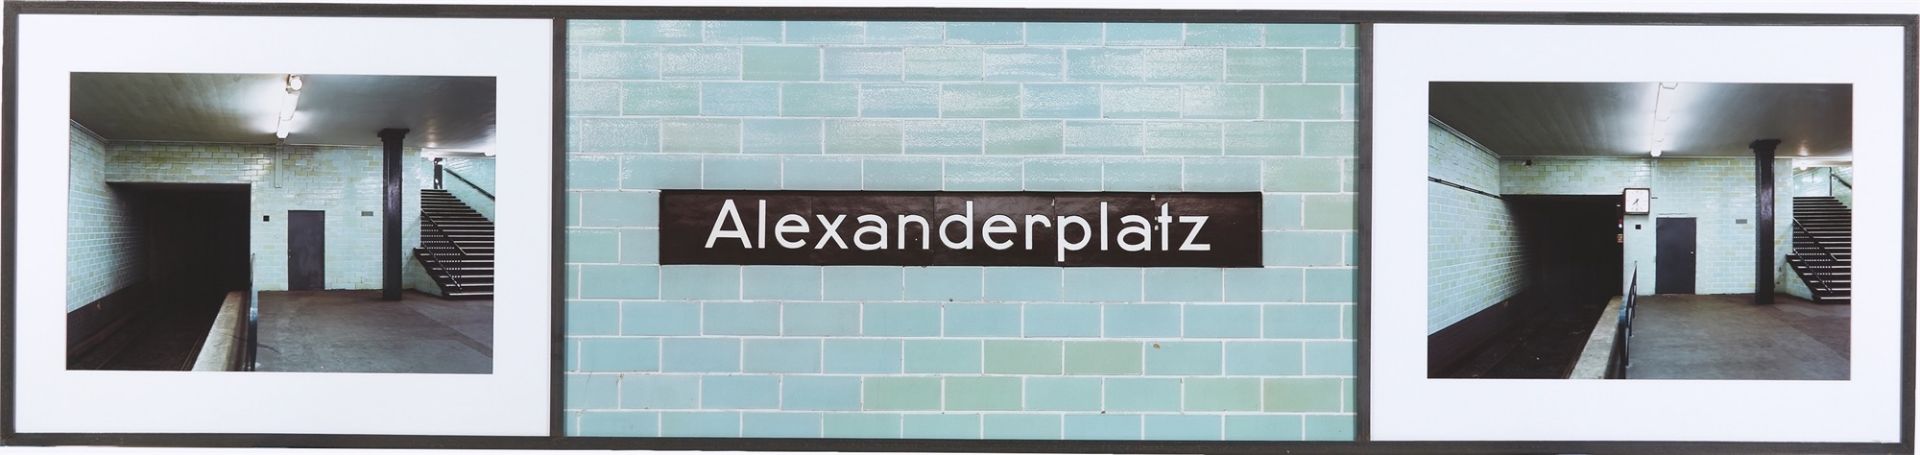 Axel Hütte. Paracelsus Bad, Gesundbrunnen, Rosenthaler Platz, Alexanderplatz, Mor…. 1979–1994 / 2019 - Image 5 of 9